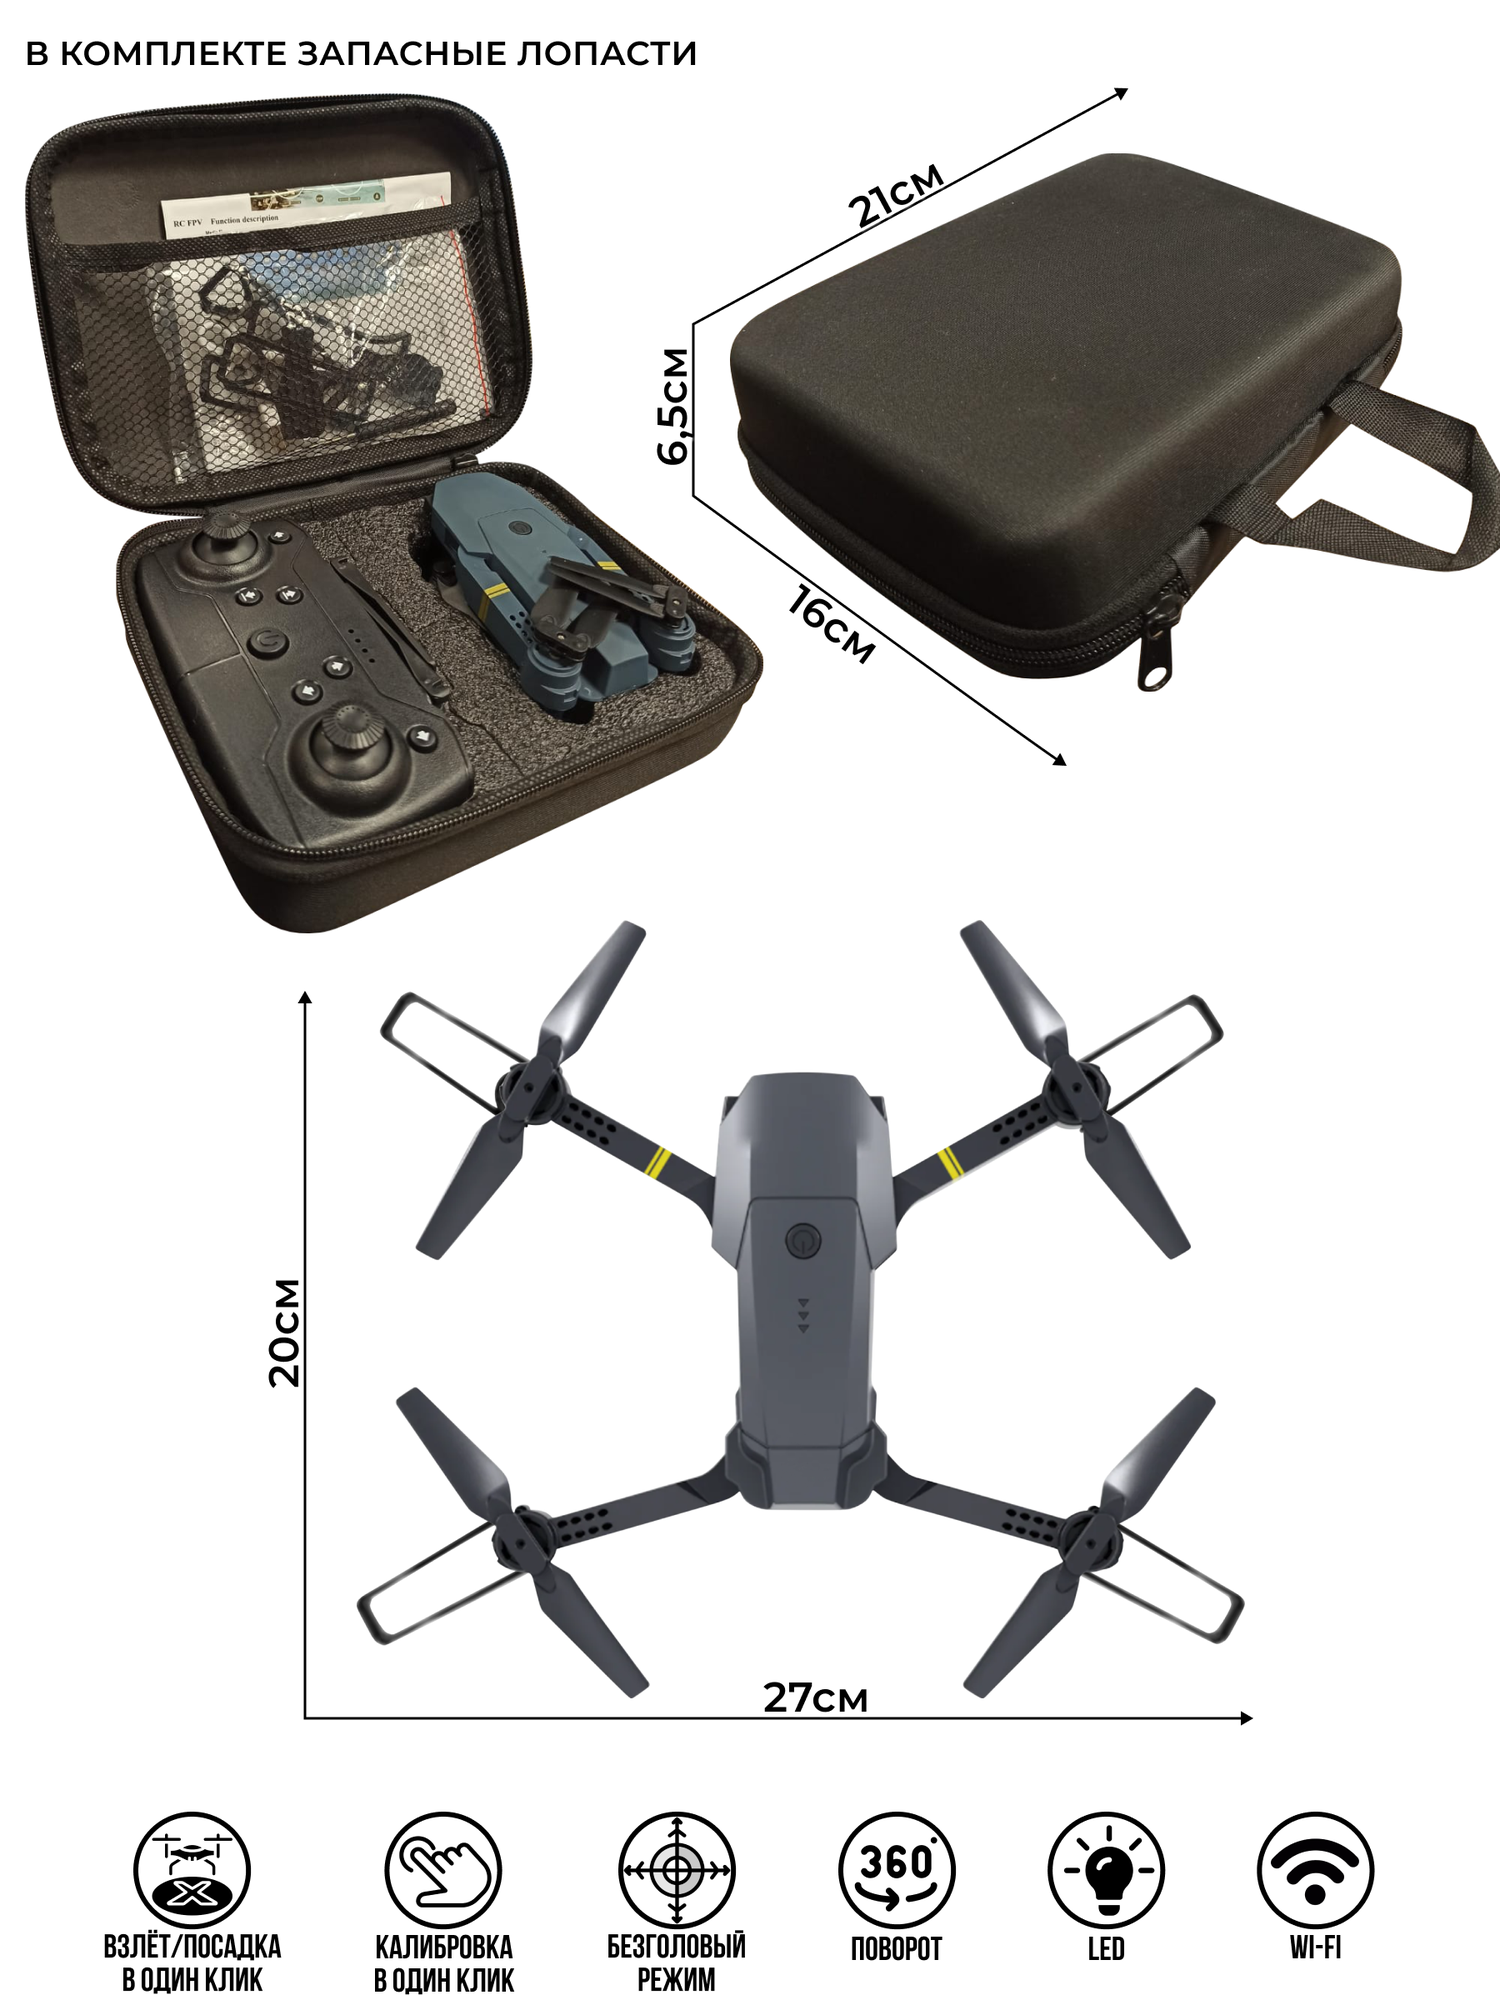 Квадрокоптер на пульте управления с камерой передача изображения наартфон размер 175х145х5 сумка для хранения